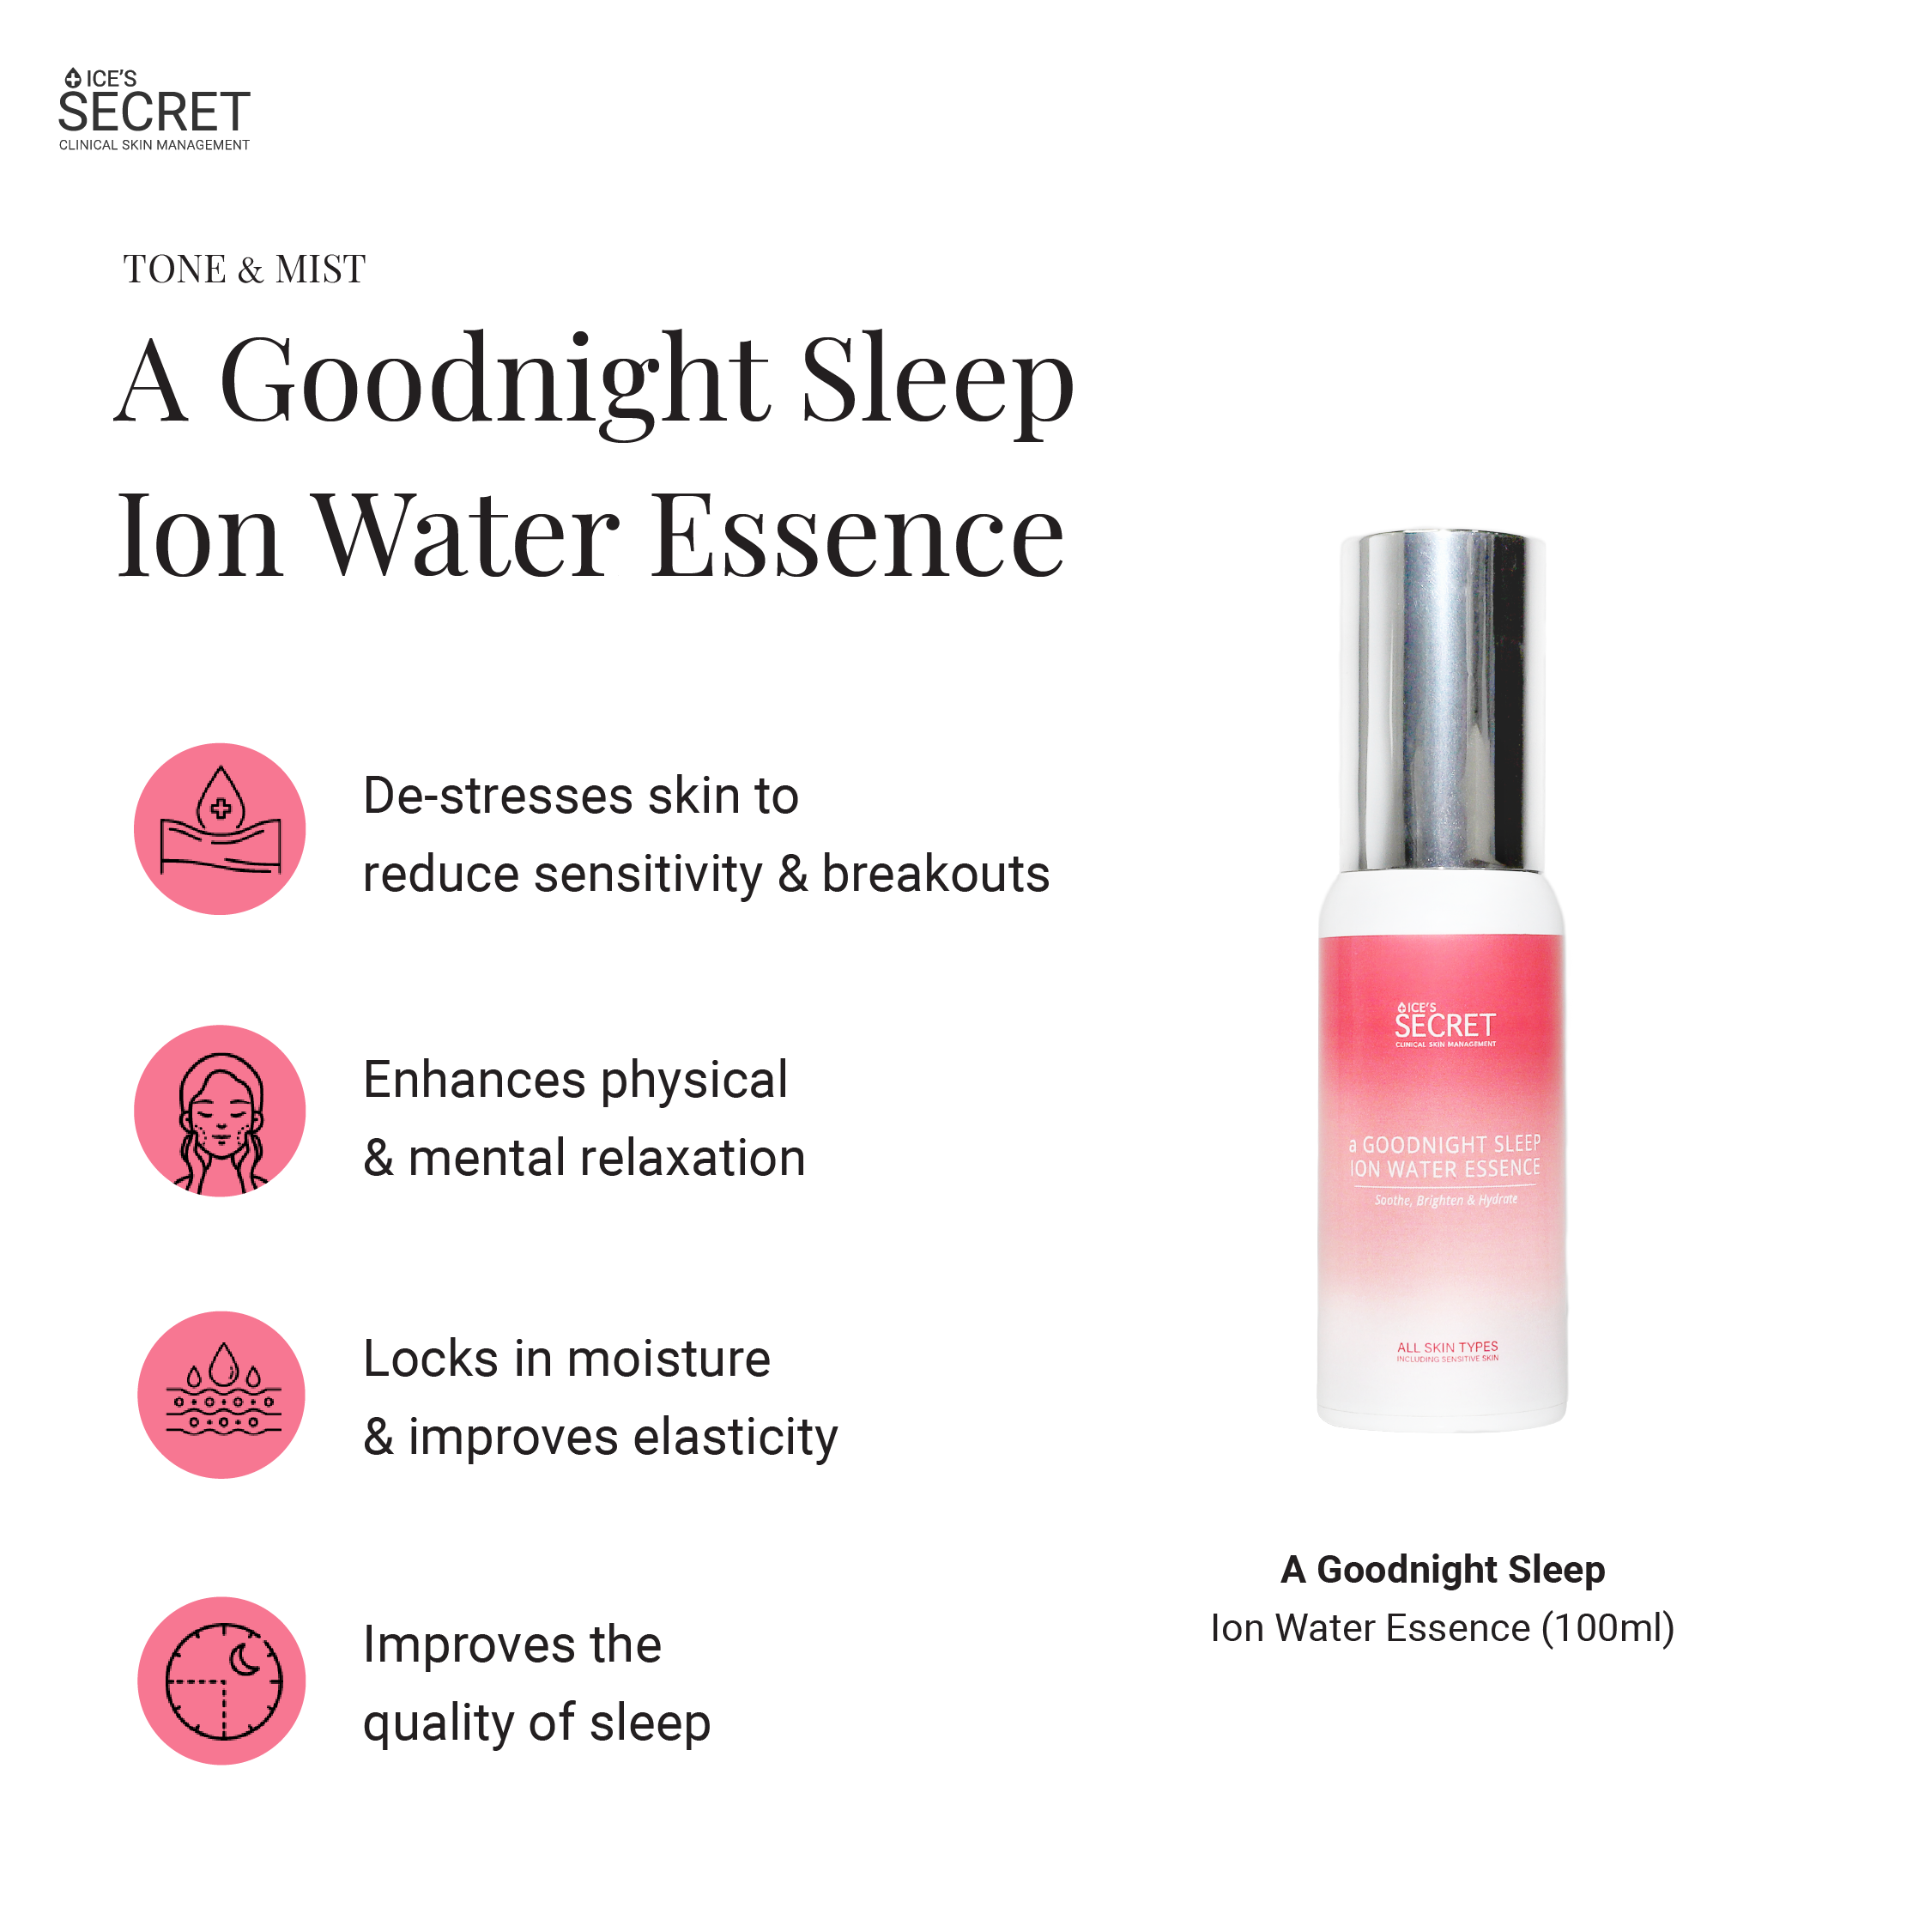 A Goodnight Sleep Ion Water Essence